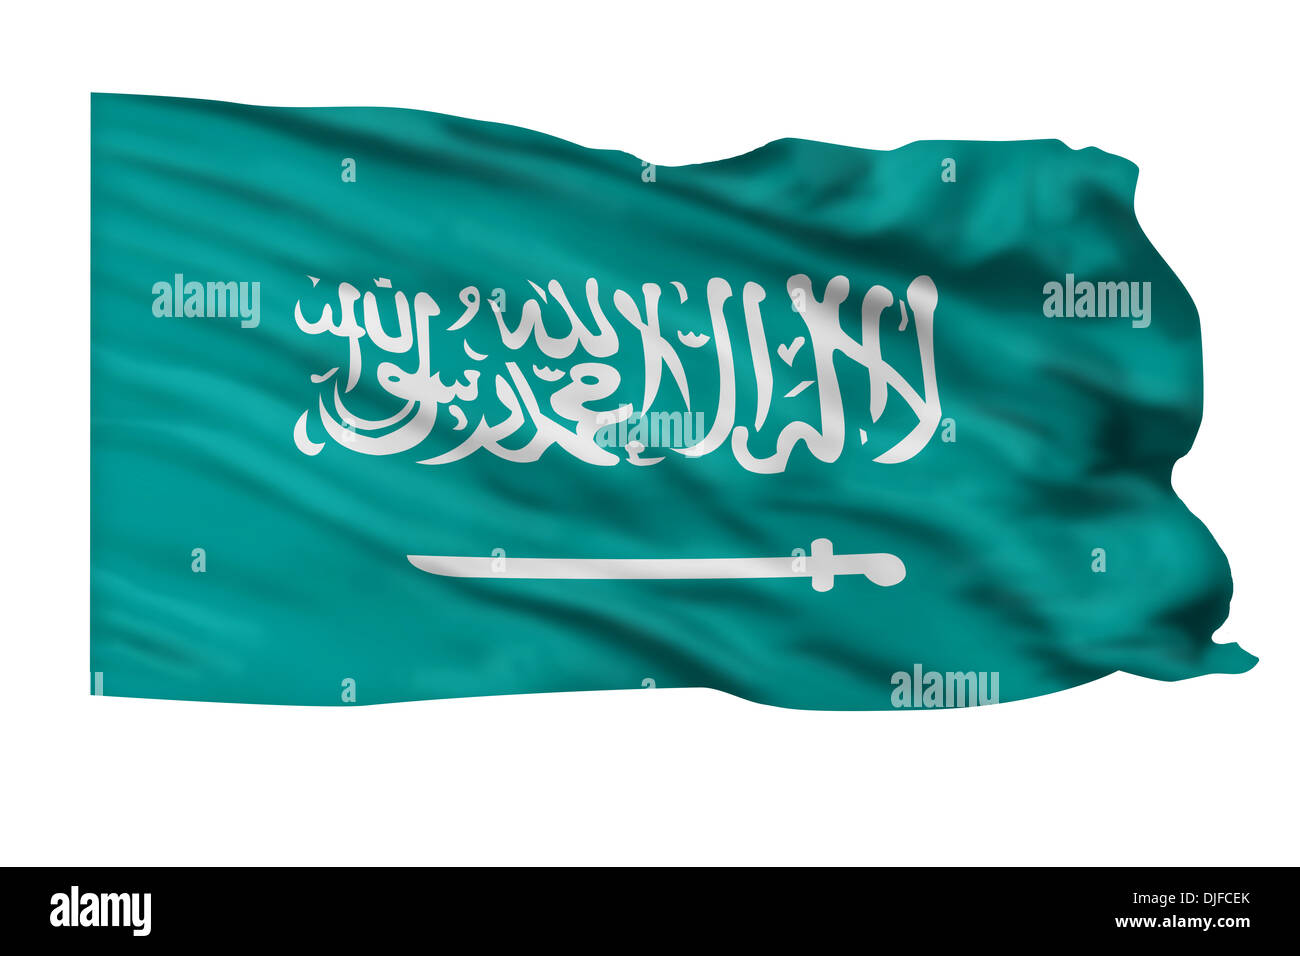 Saudi Arabia flag waving high in the air. Stock Photo